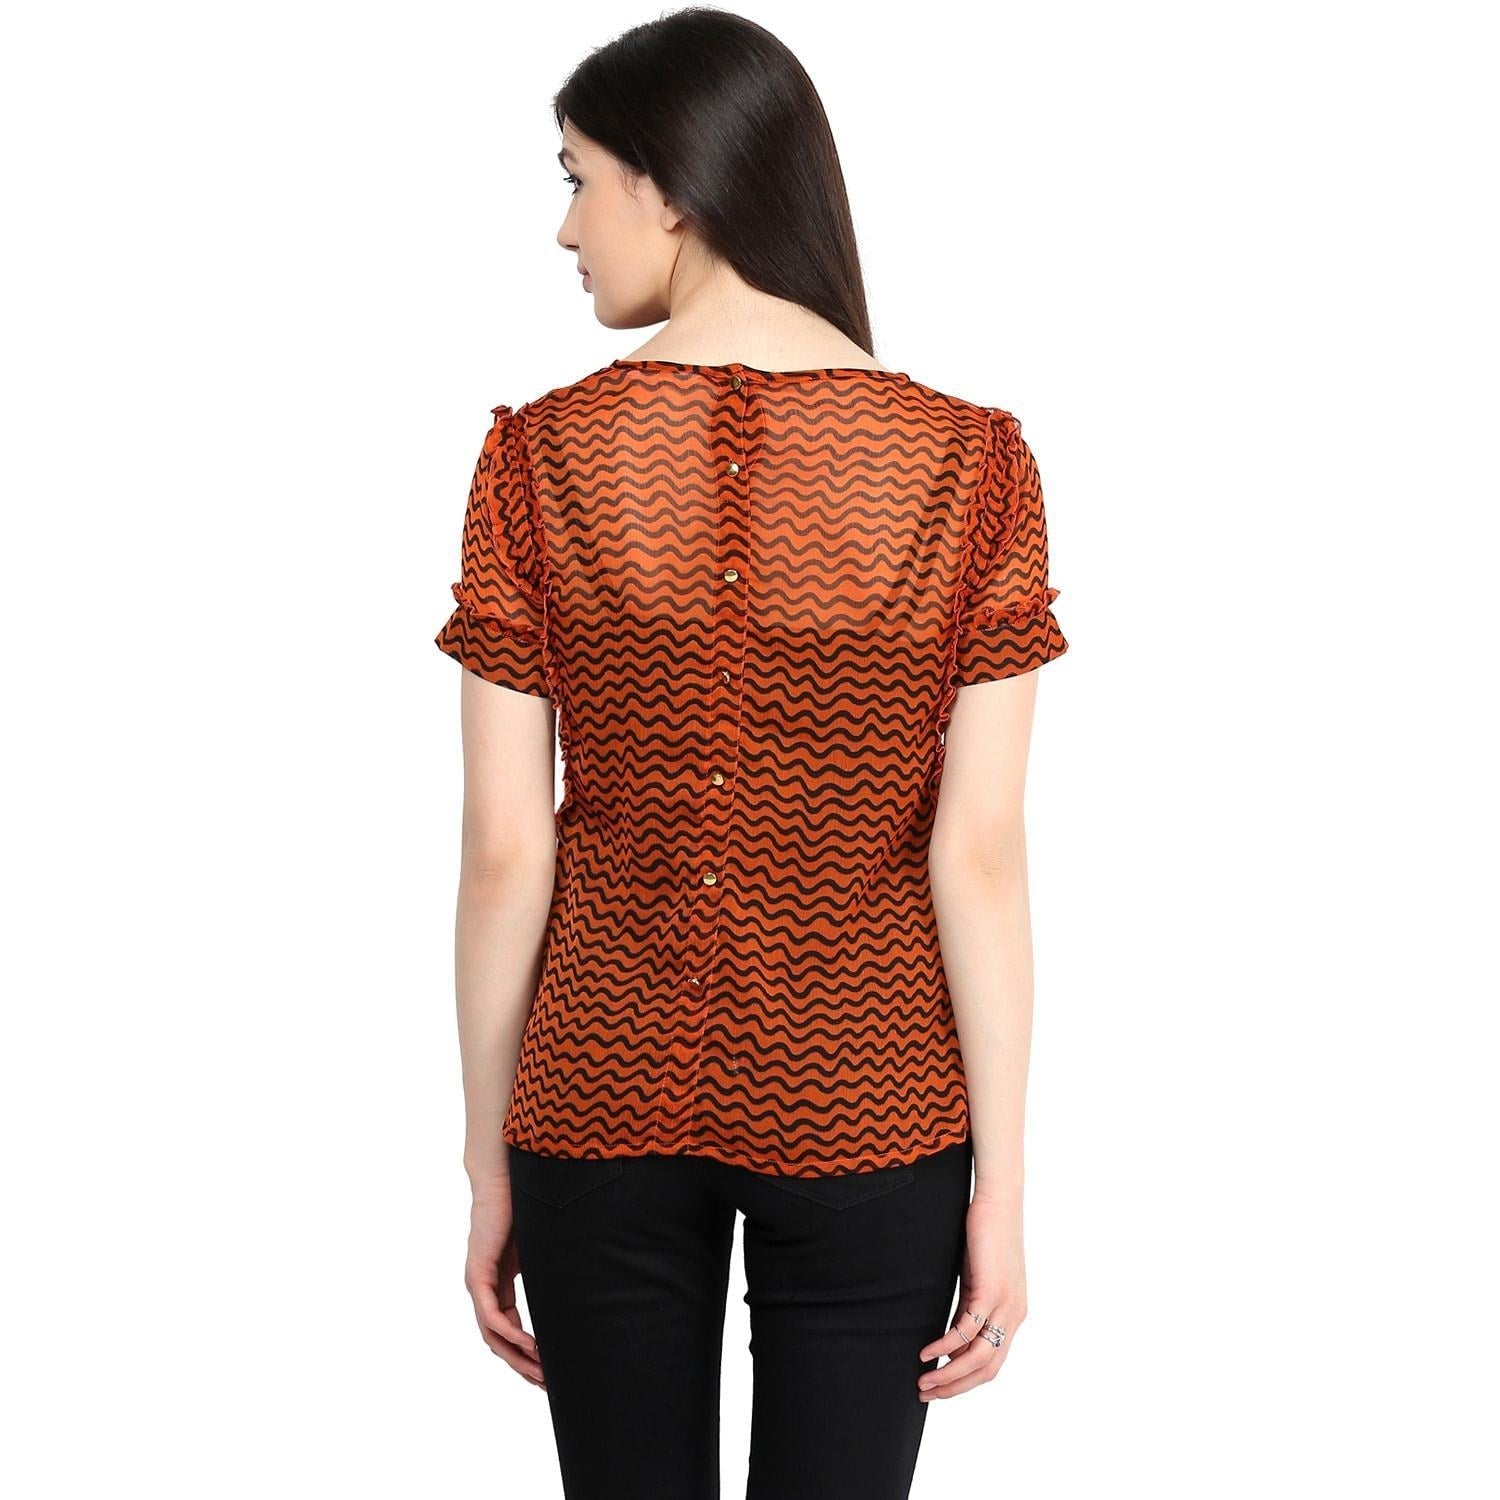 Women's Orange Frill Shirt Top - Pannkh